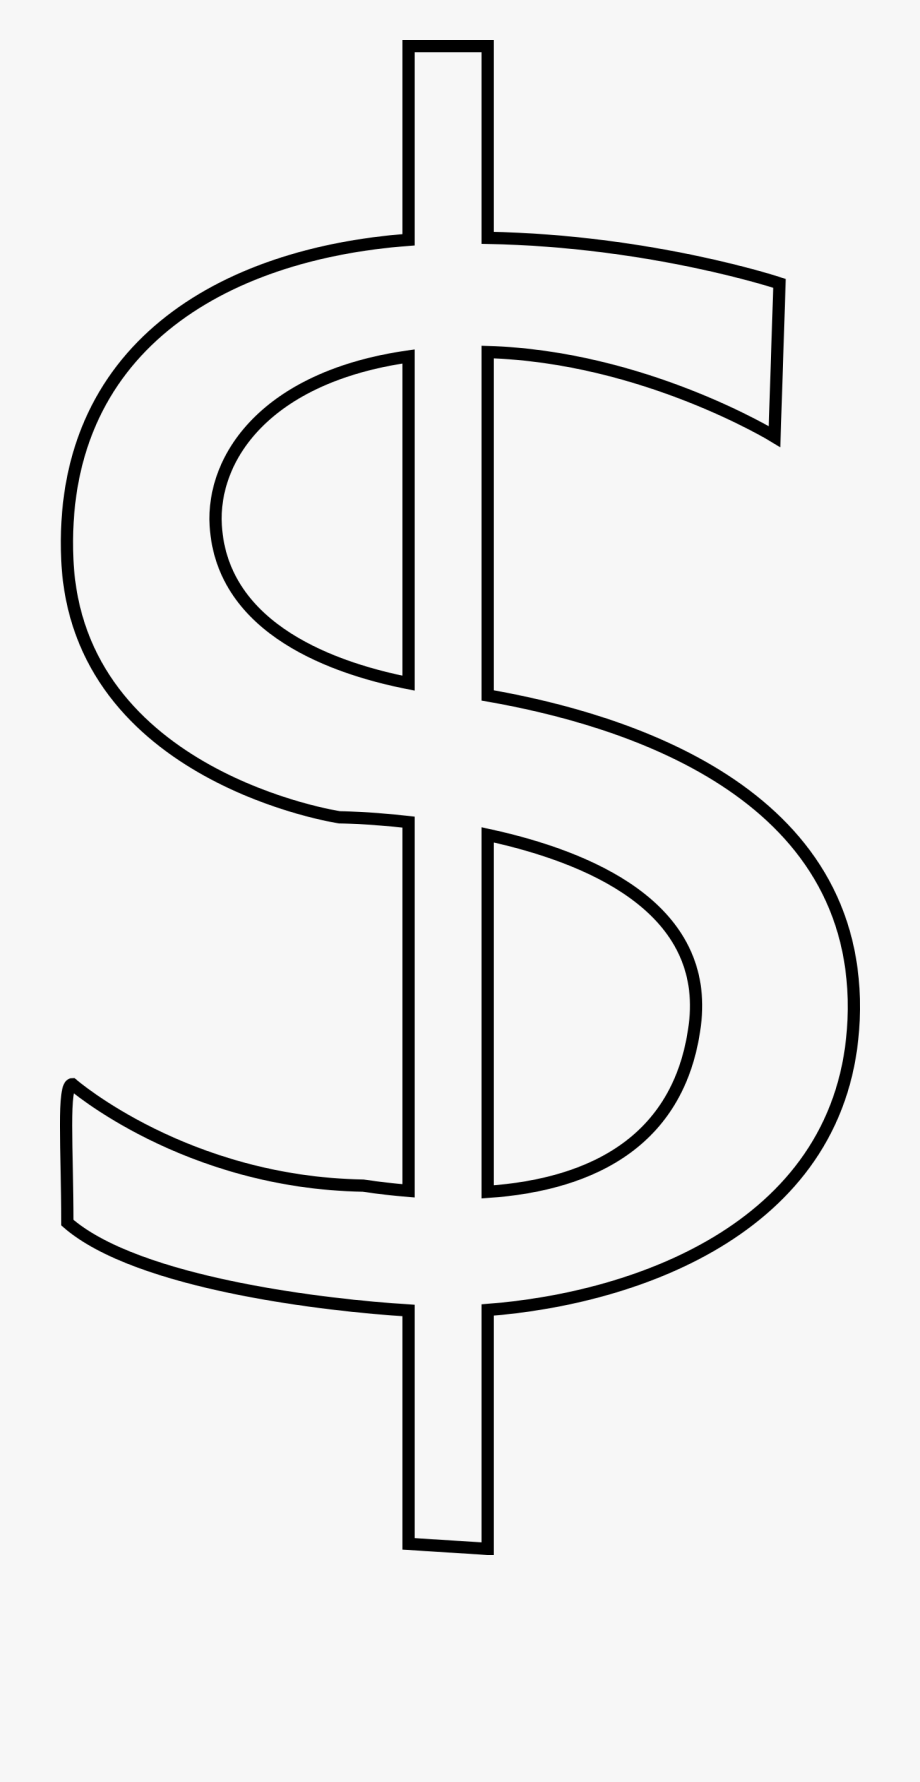 Dollar symbol clipart.